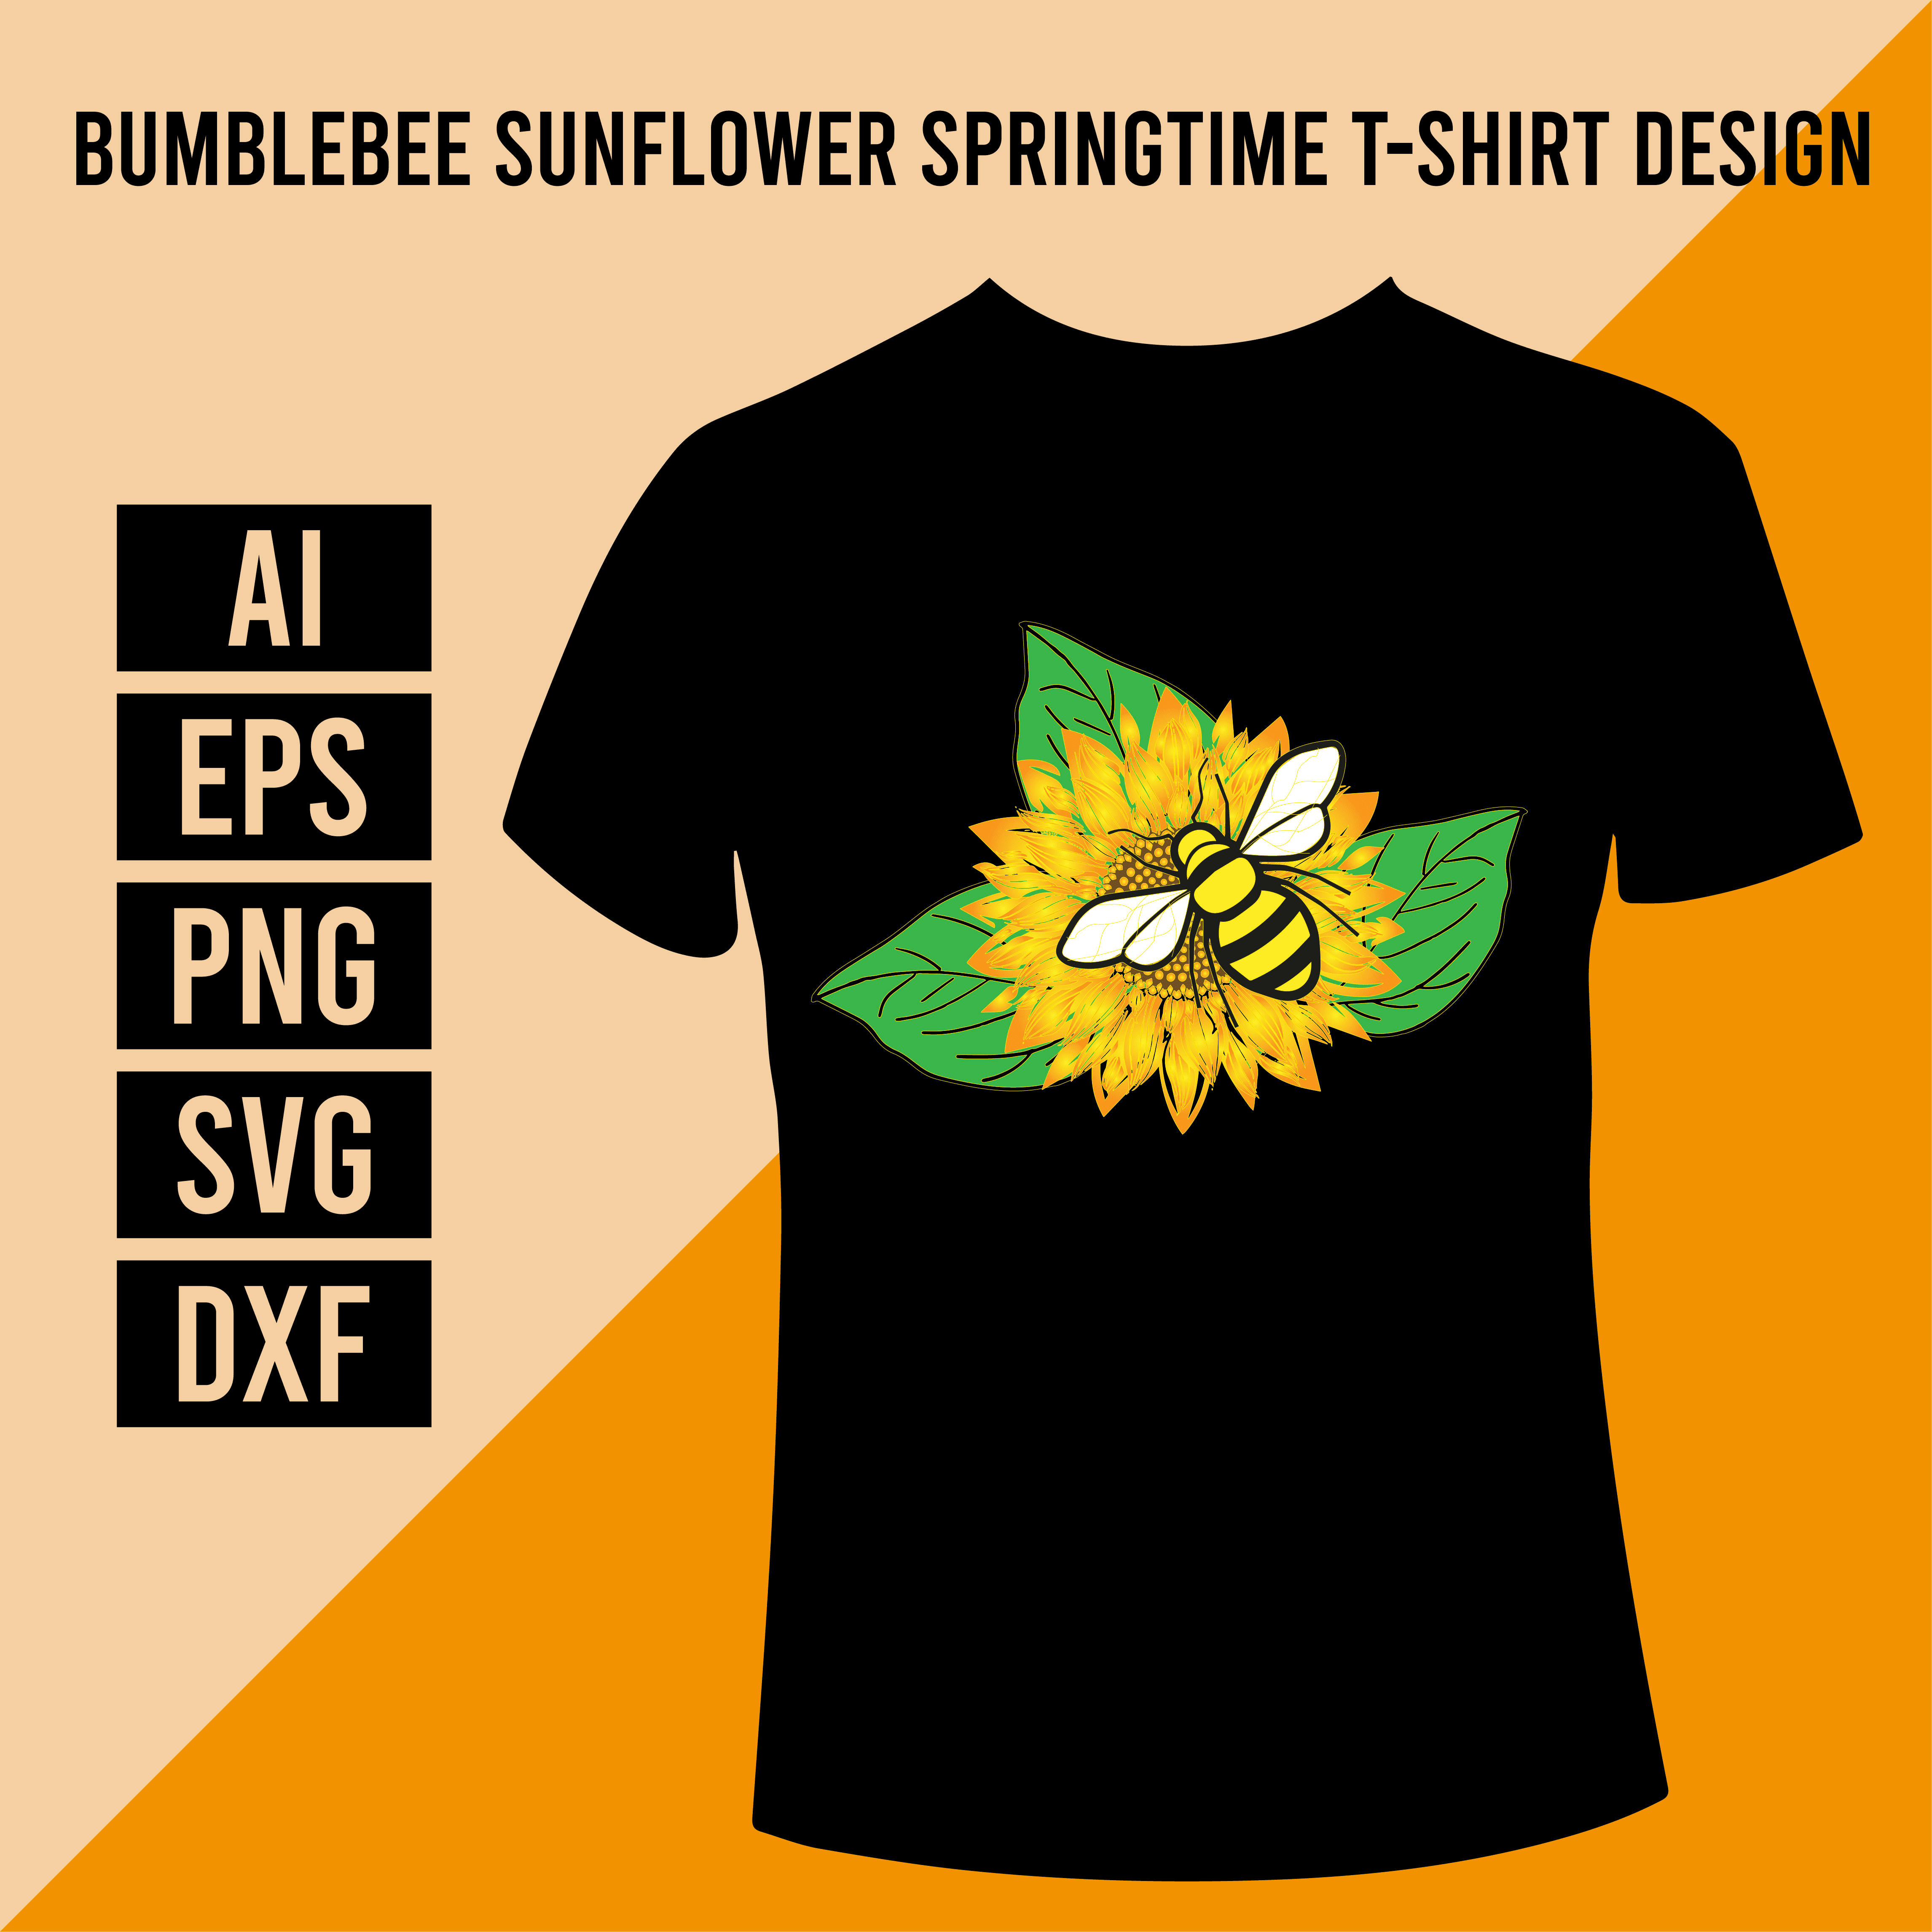 Bumblebee Sunflower Springtime T- Shirt Design main cover.